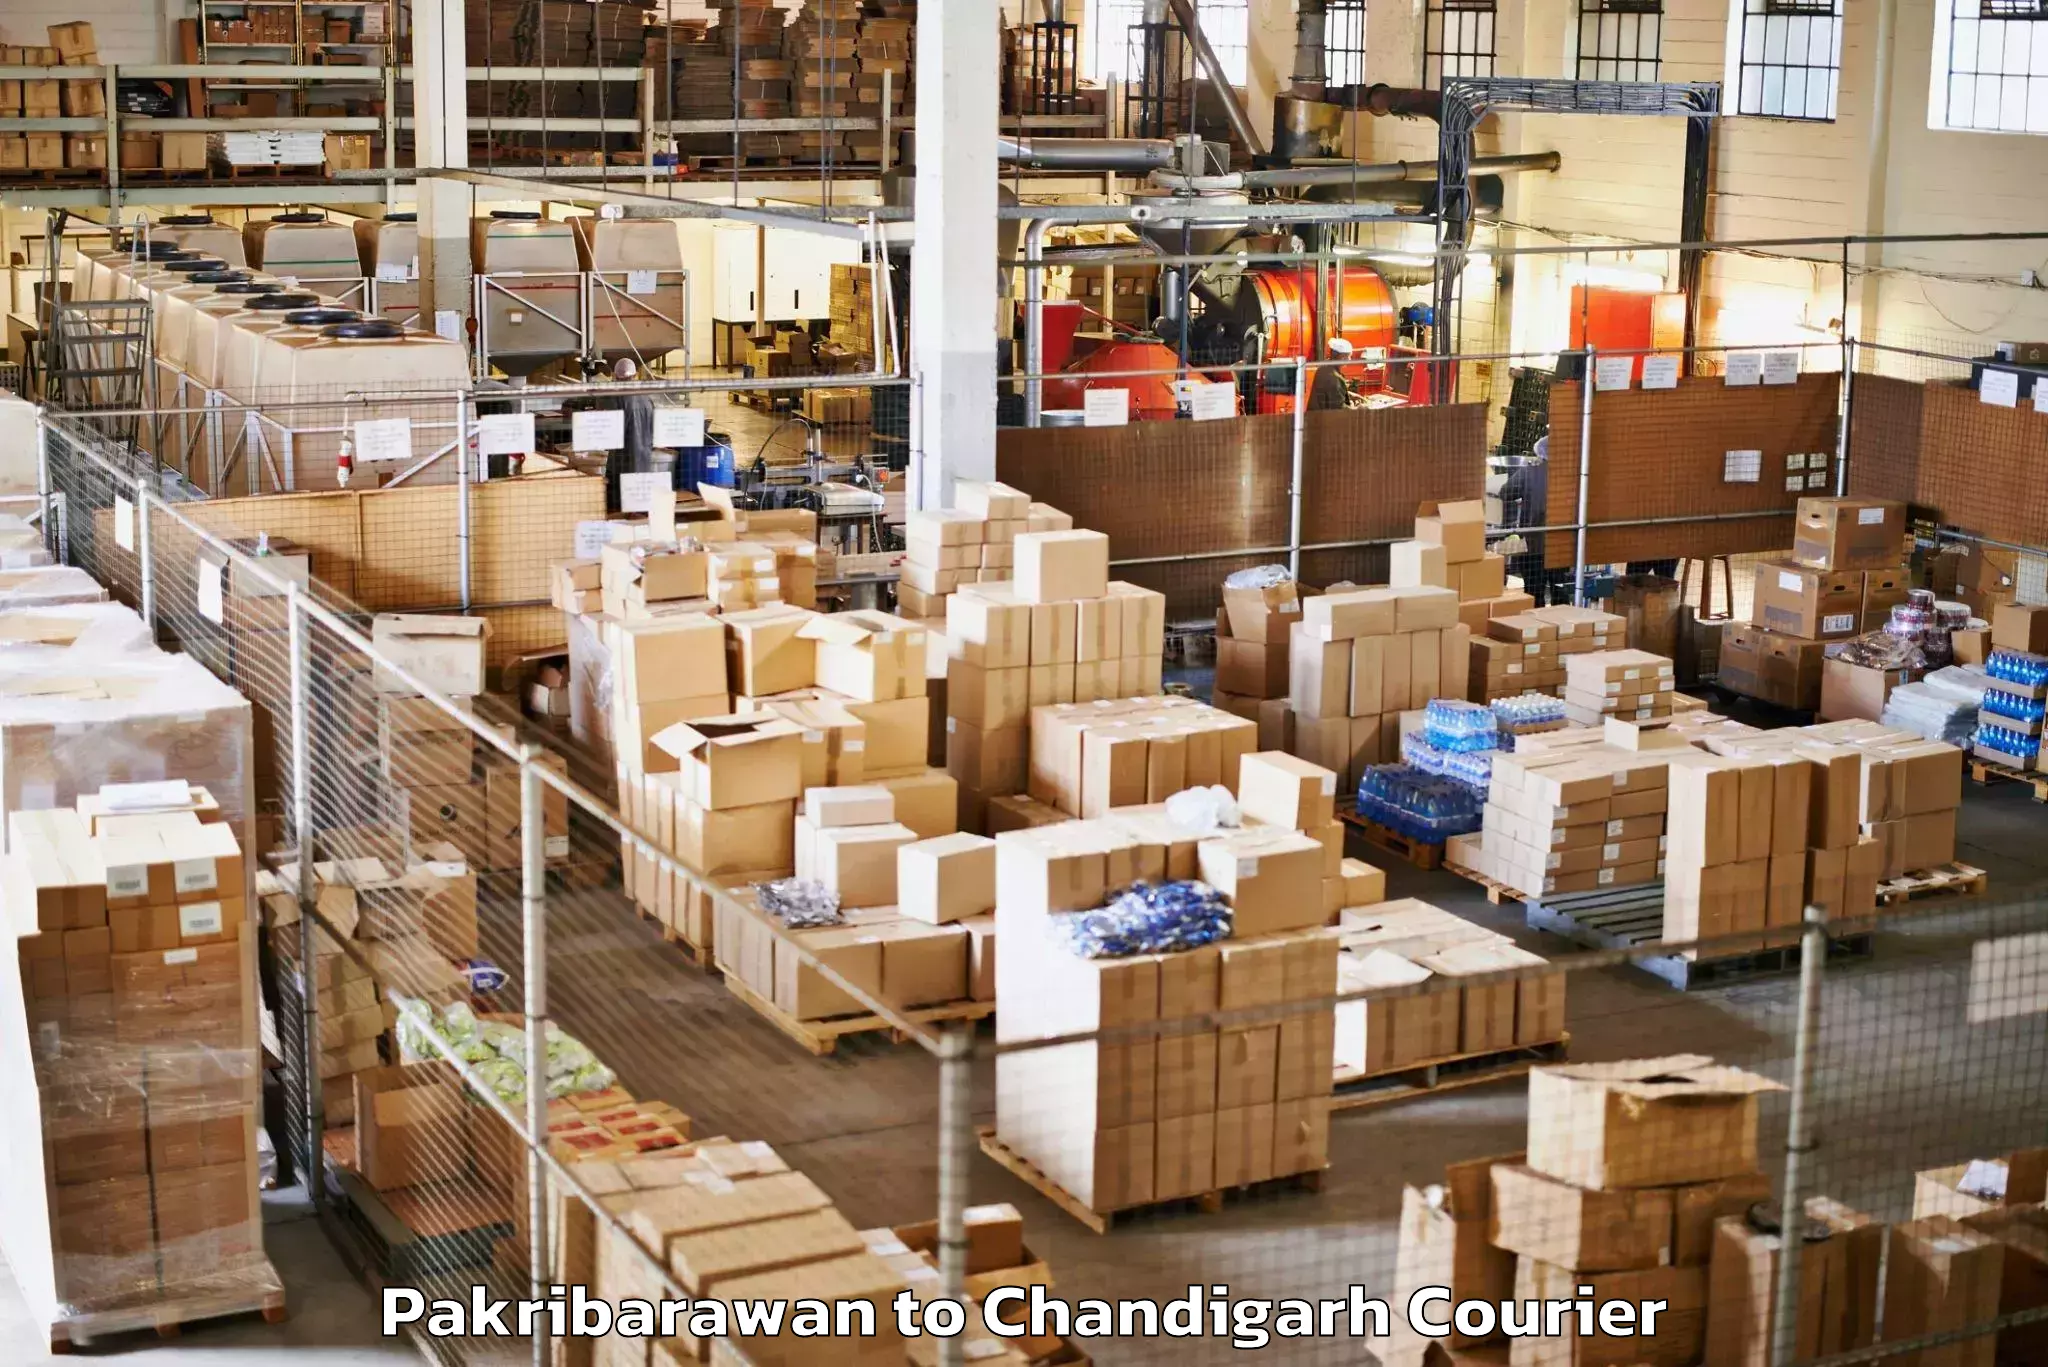 Baggage relocation service Pakribarawan to Panjab University Chandigarh